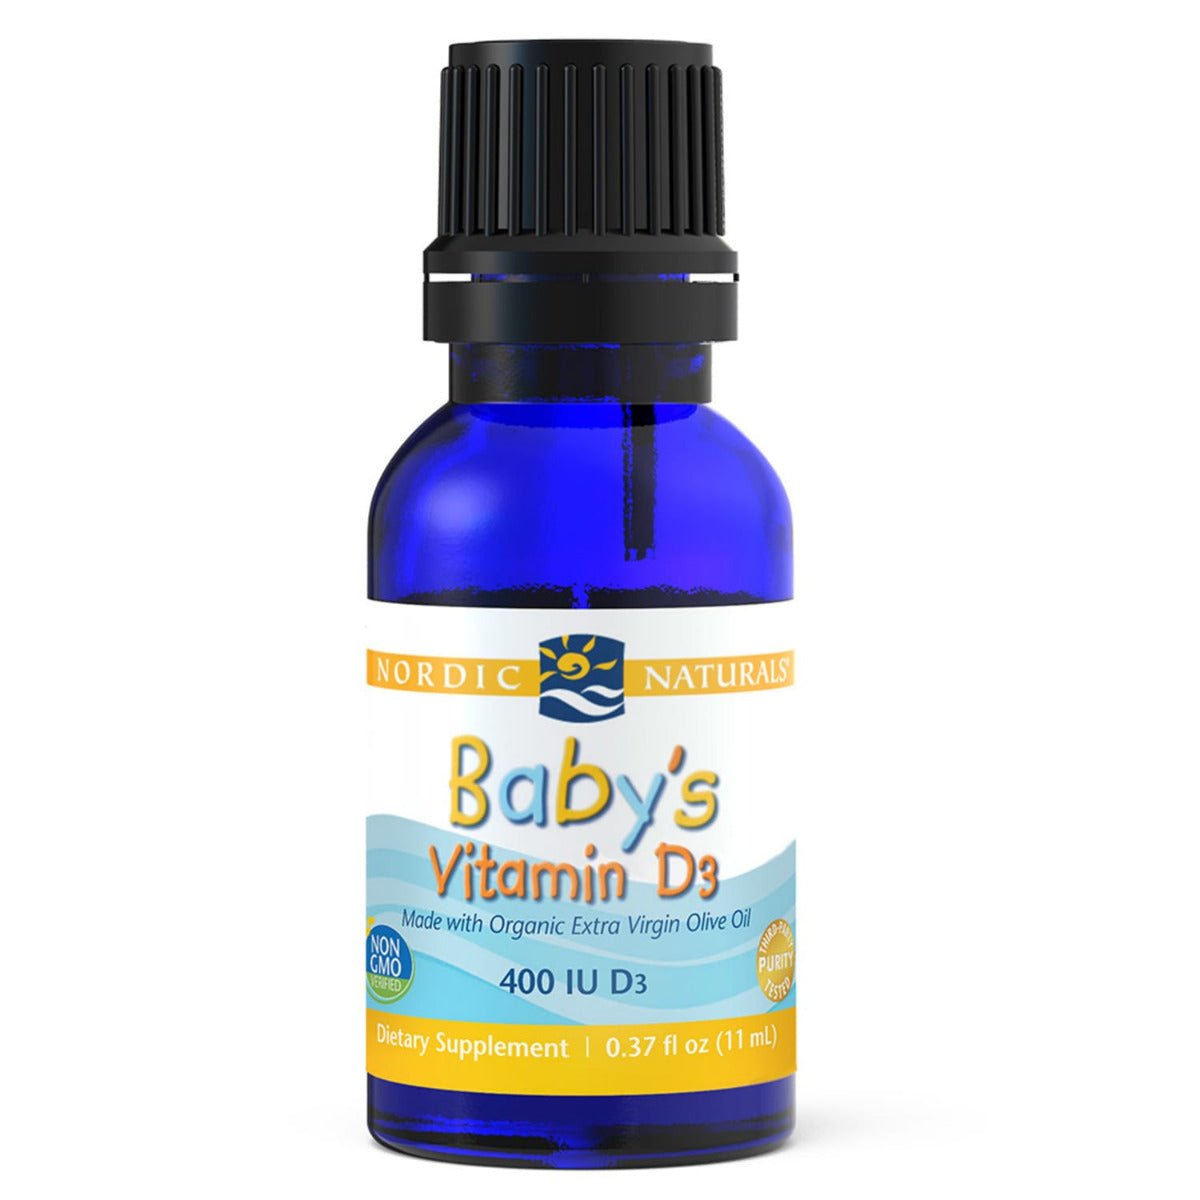 Baby's Vitamin D3 11 ml Nordic Naturals Sklep Nordic.pl